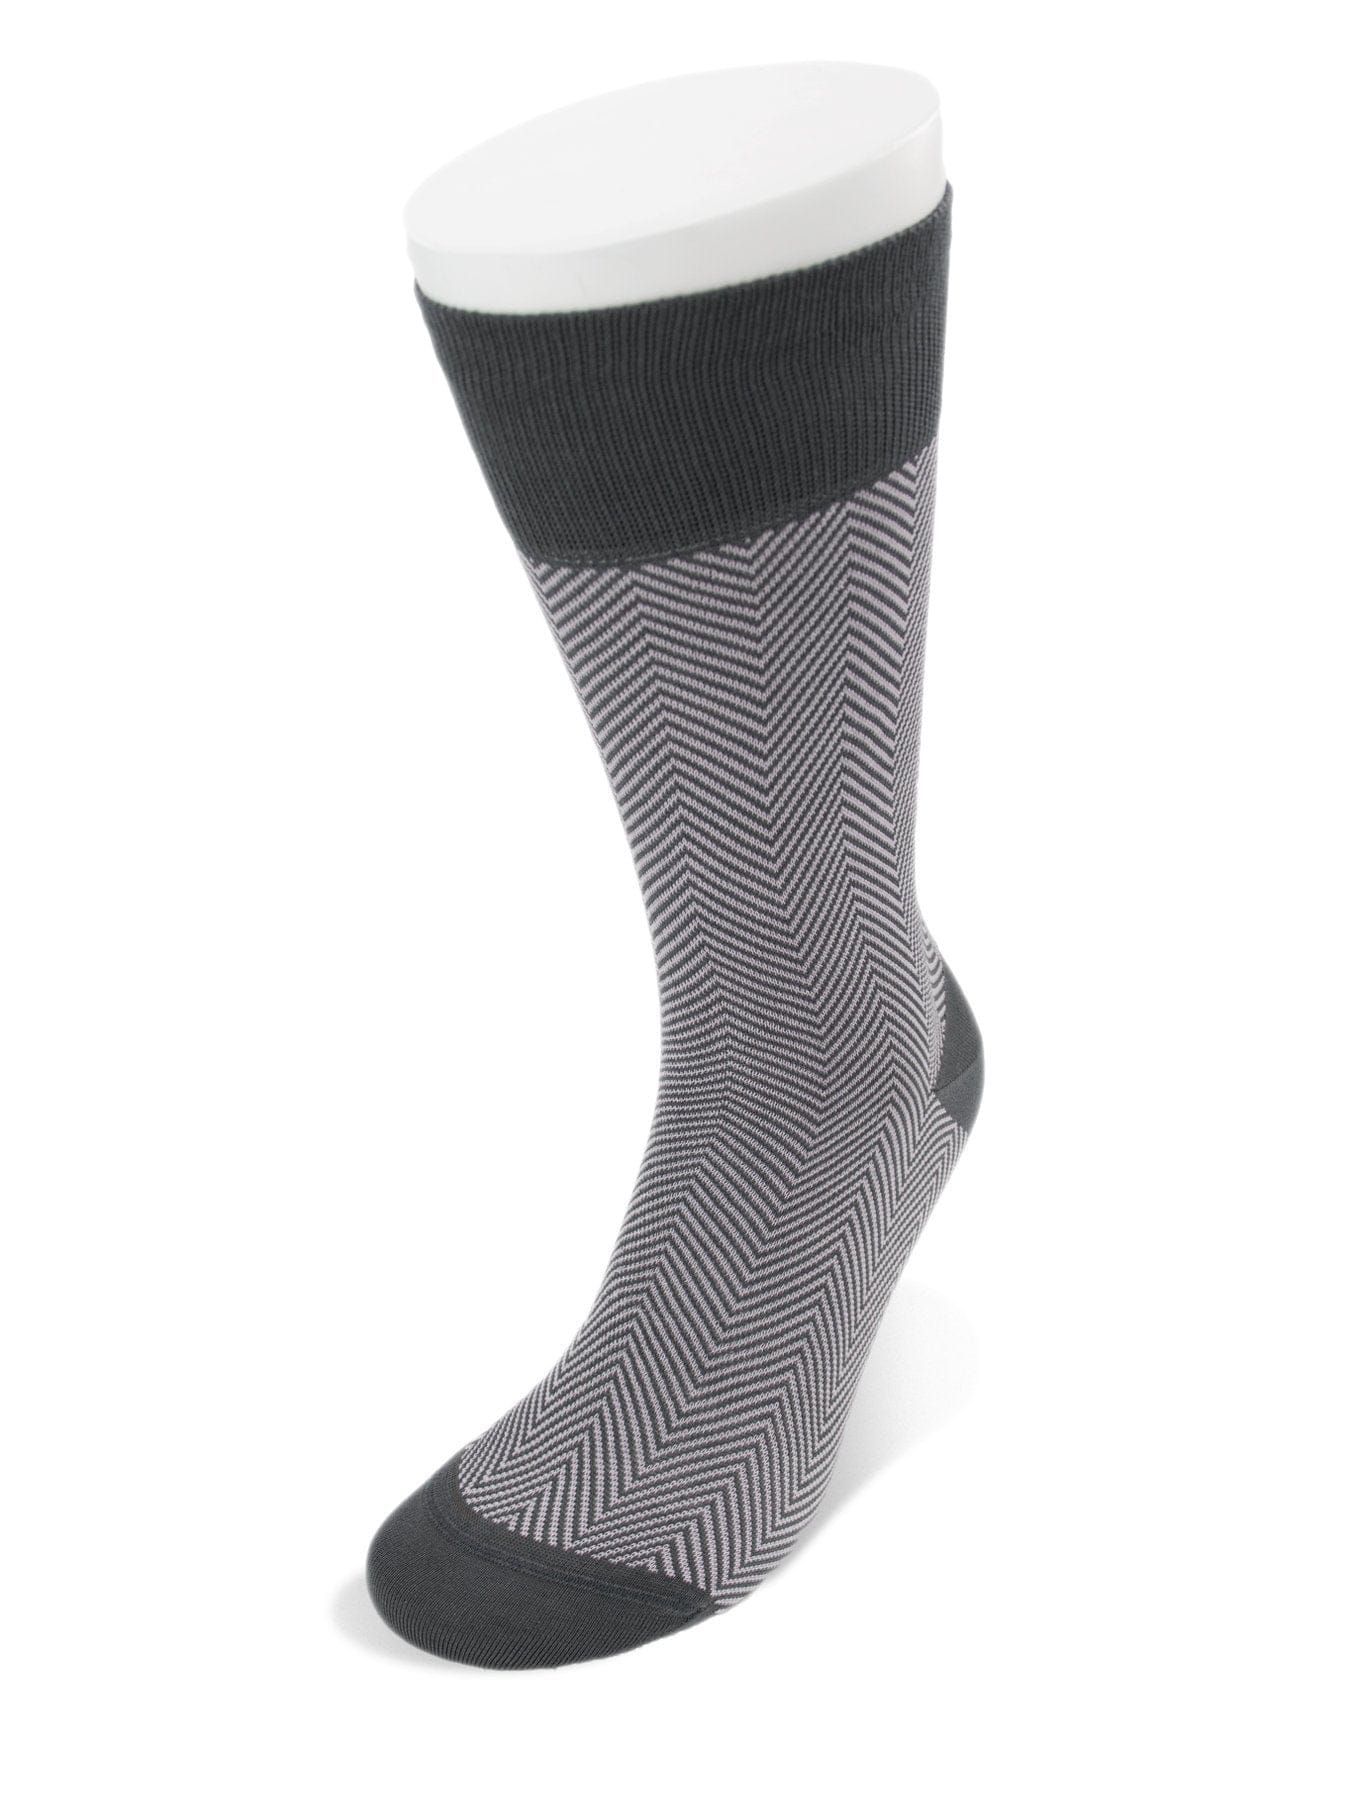 Short Grey Herringbone Cotton Socks